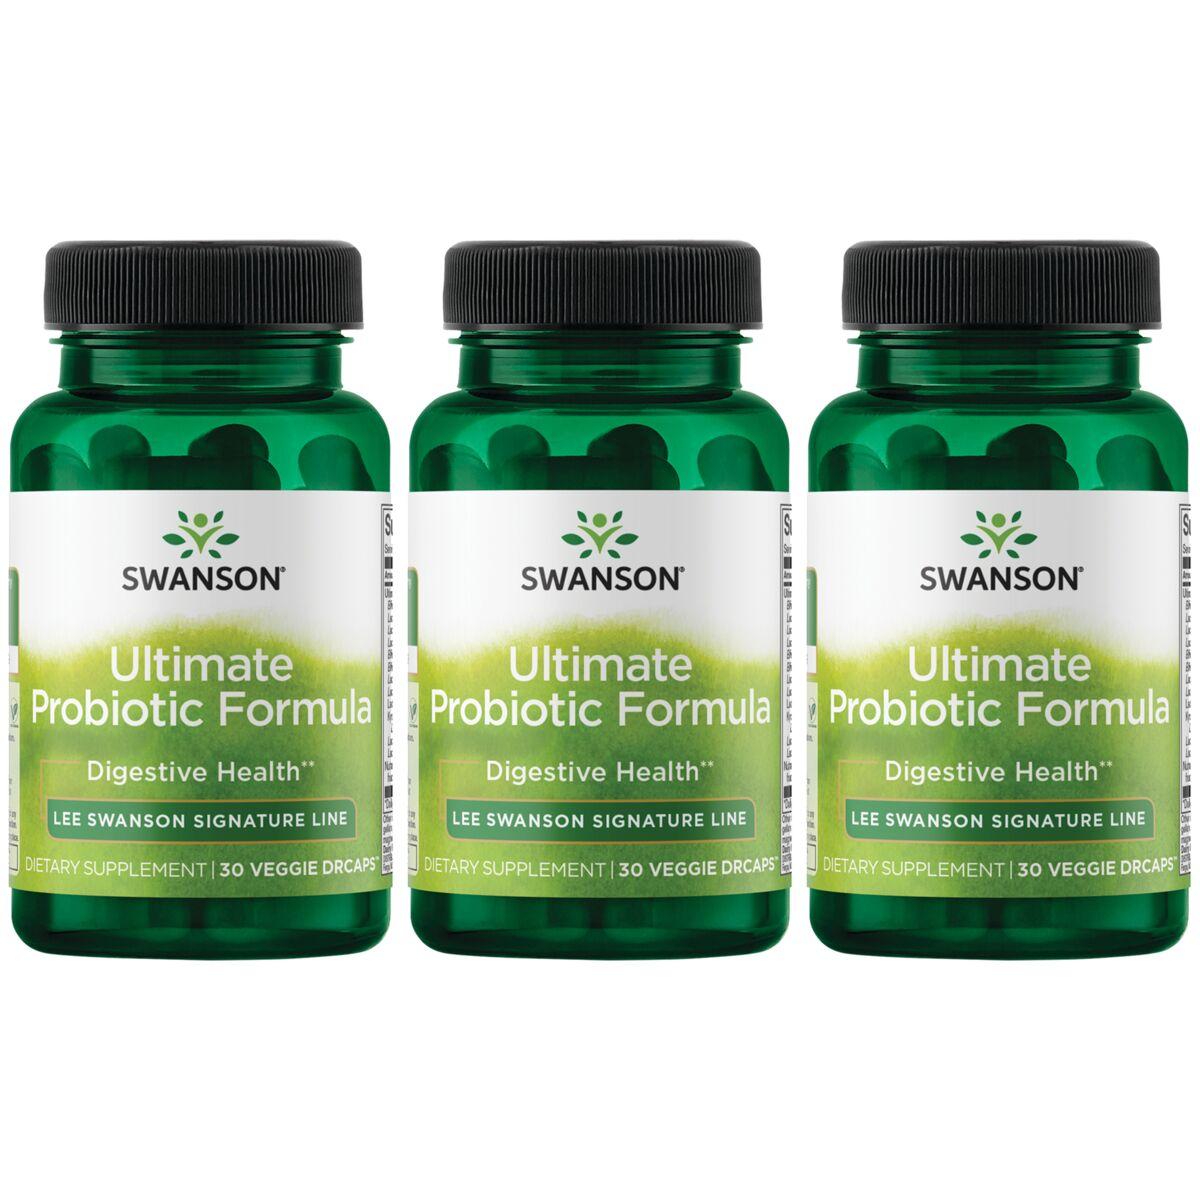 Lee Swanson Signature Line Ultimate Probiotic Formula - 3 Pack Supplement Vitamin | 66.5 Billion CFU 3 Pack